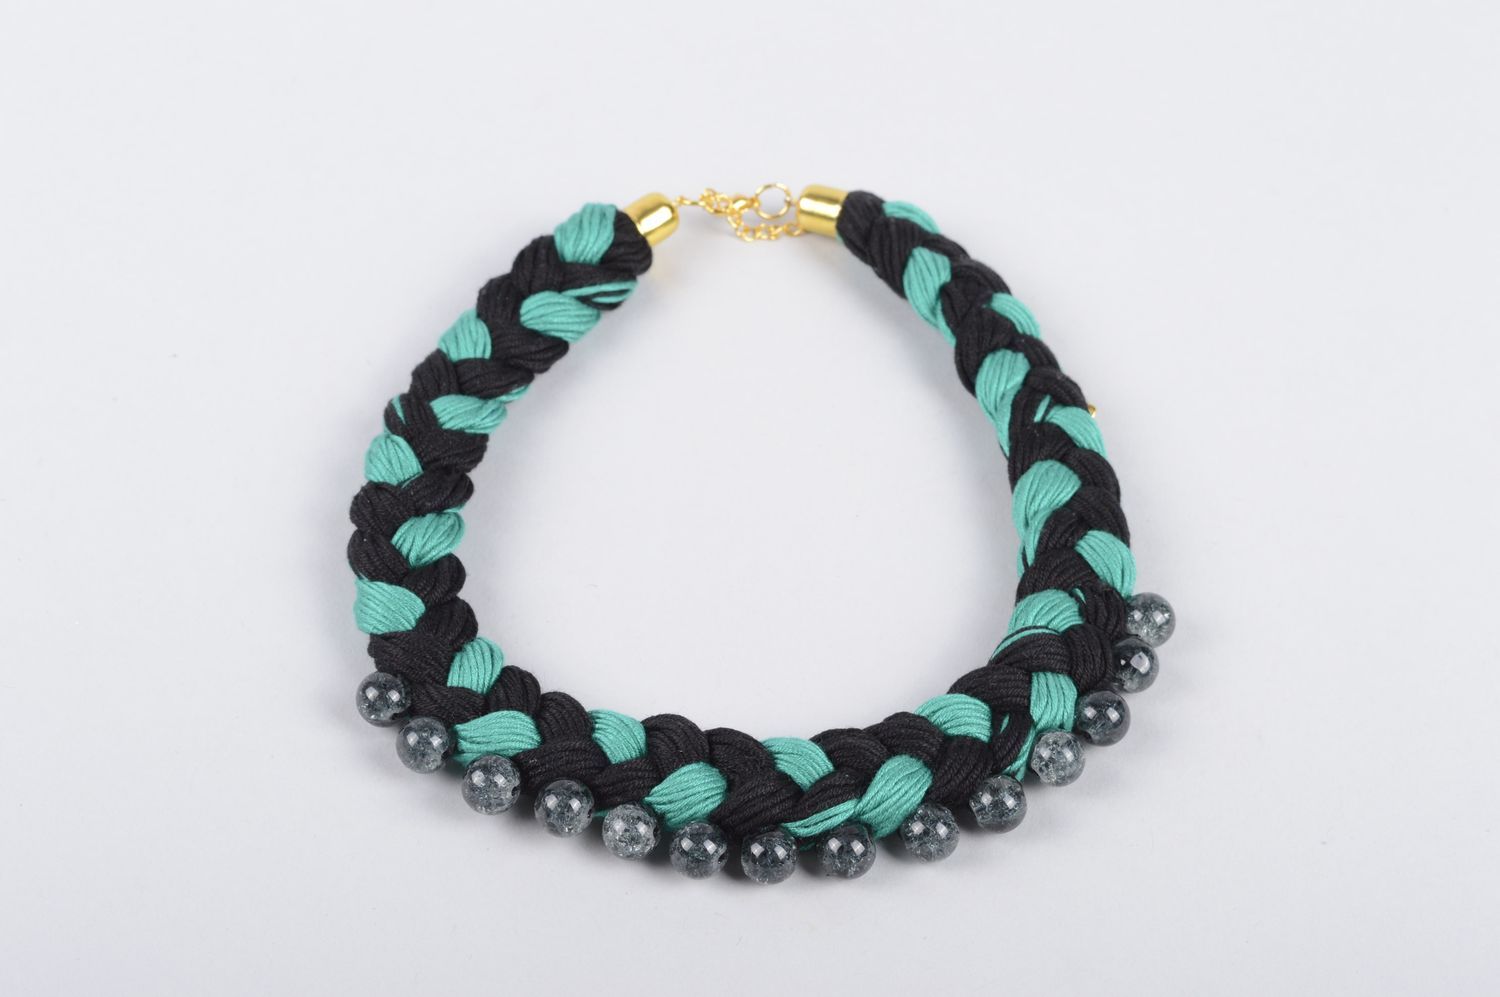 Handmade fabric necklace with beads necklace stylish jewelry designer accessory photo 1